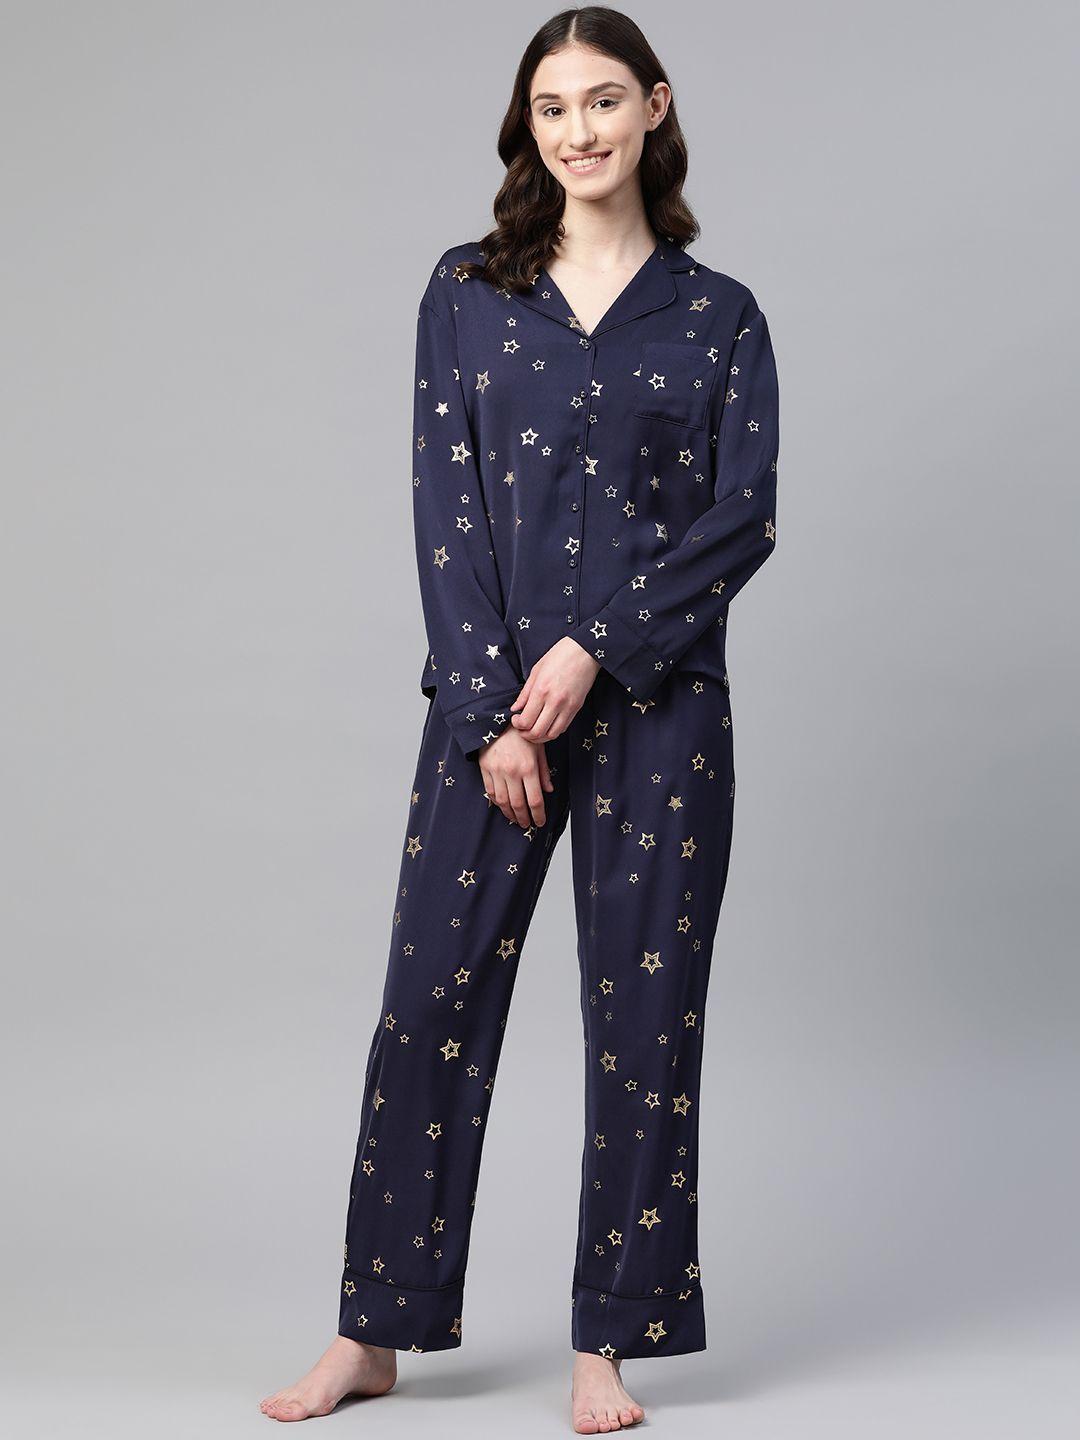 marks & spencer x boutique star printed pyjama set with eye mask